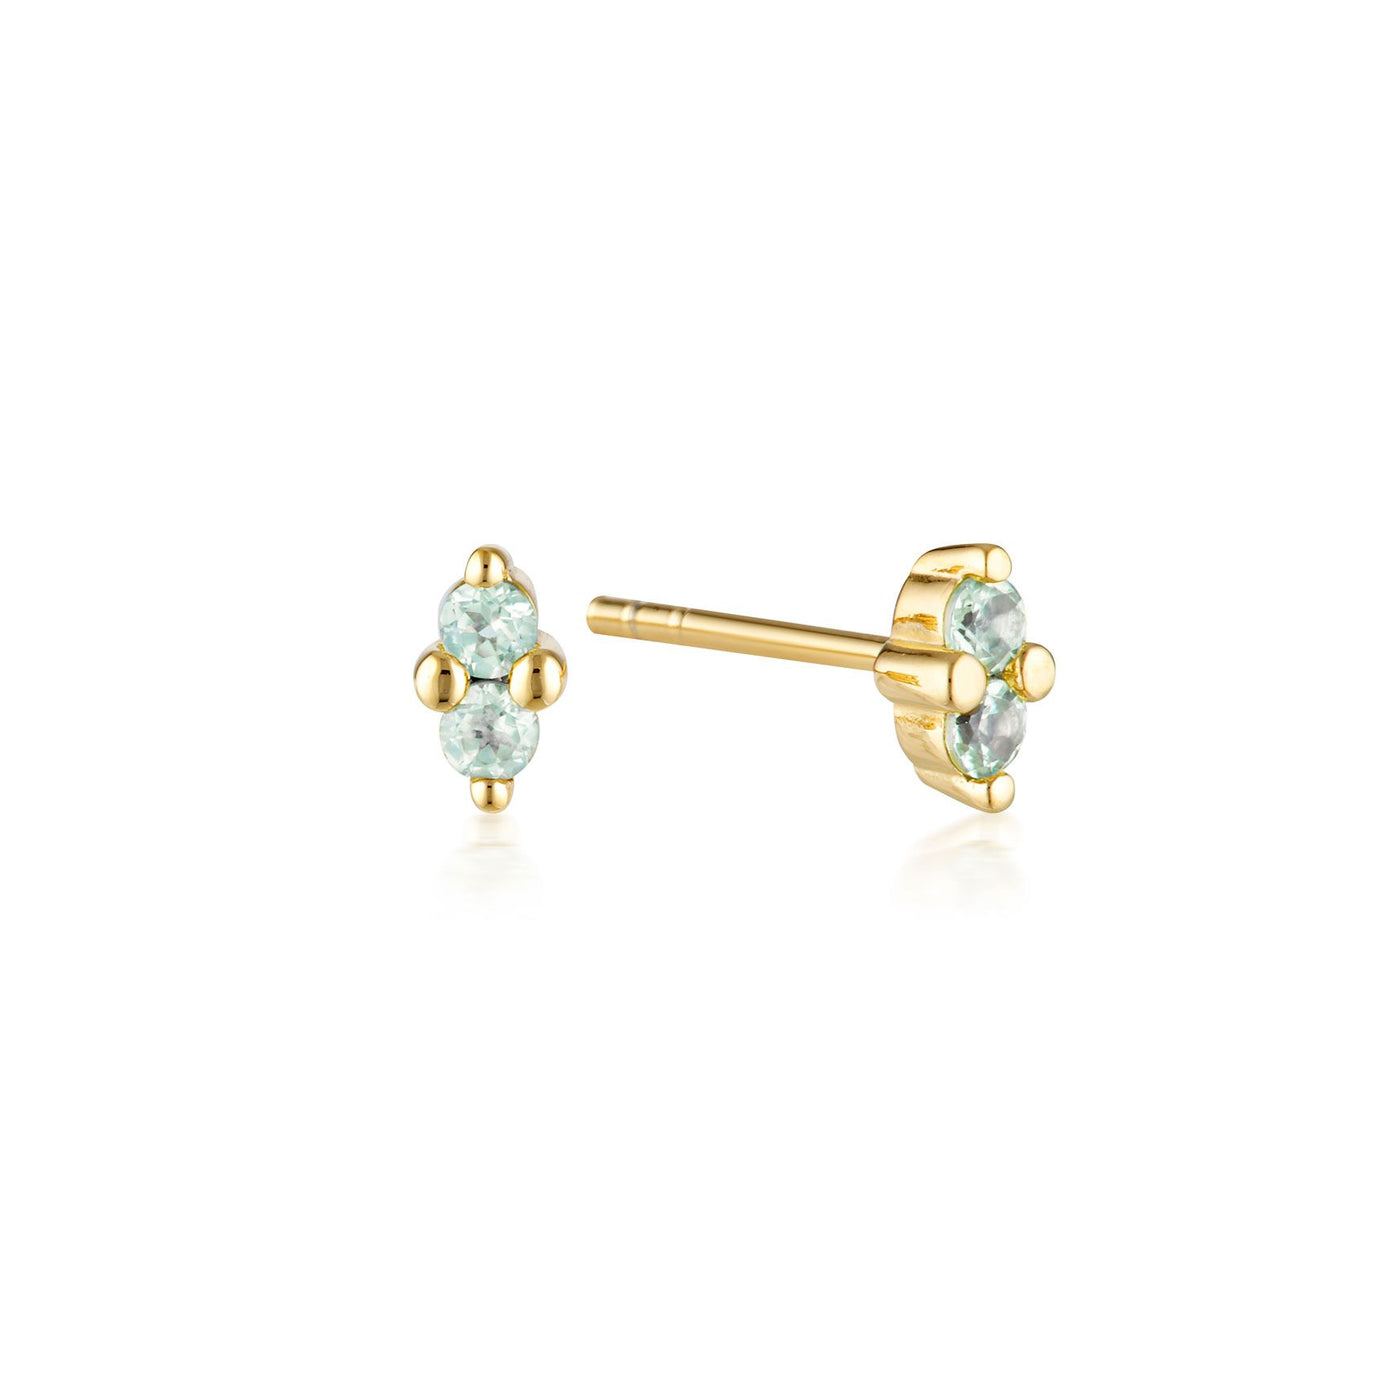 Linda Tahija Twin Gem Stud Earrings Aquamarine, Gold